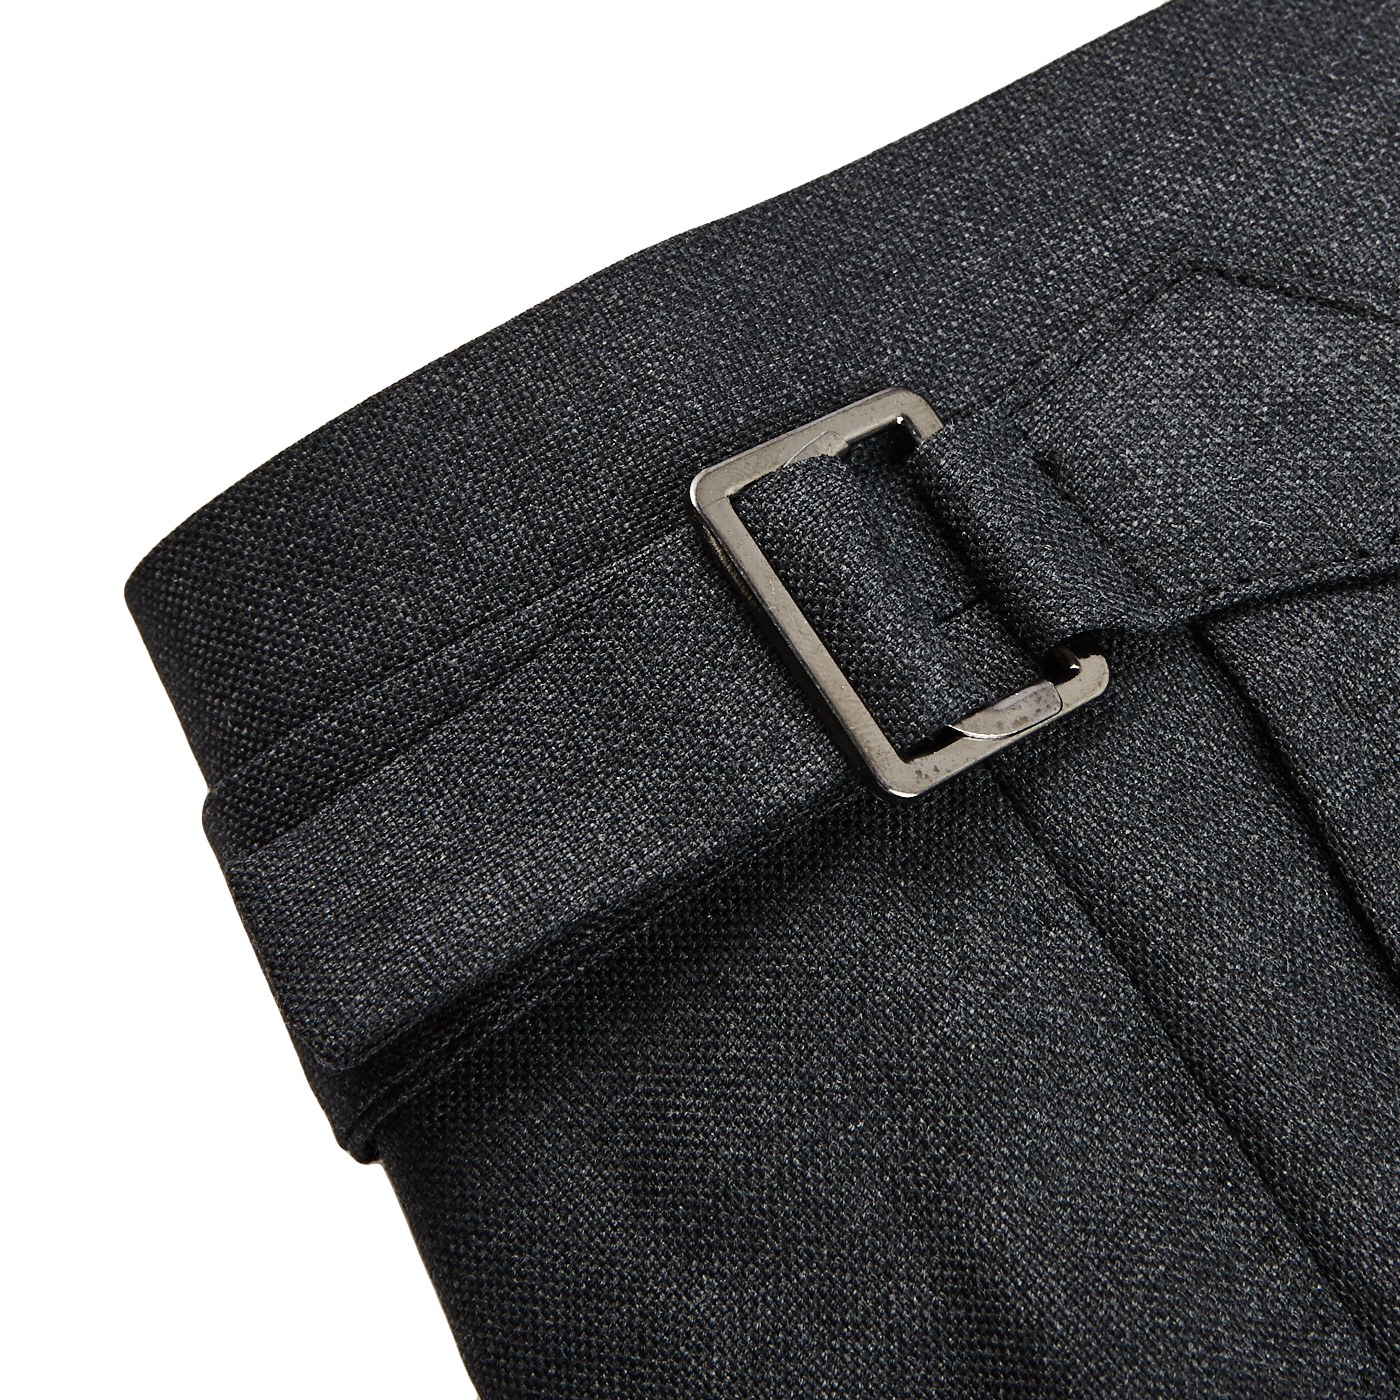 Slim / Tailored Fit Blue Checks Side Adjuster Dress Pants - DPT1F2.5 - The  Shirt Bar